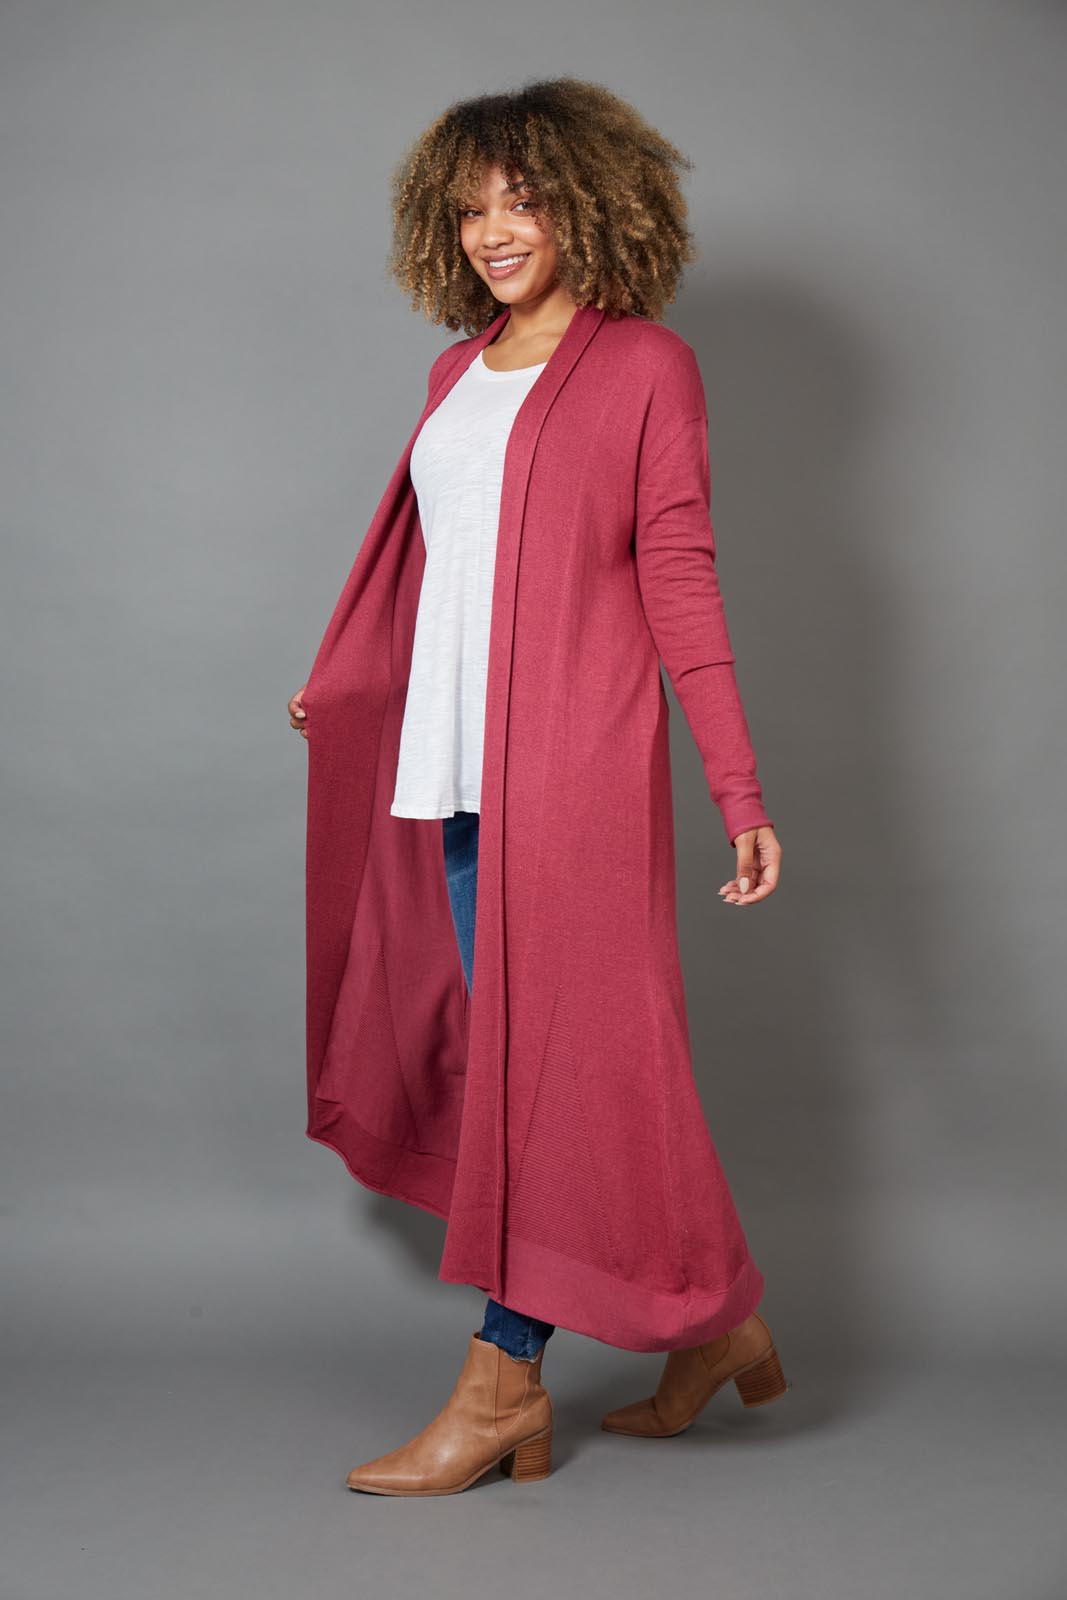 Cleo Longline Cardigan - Mulberry - eb&ive Clothing - Knit Cardigan Long One Size